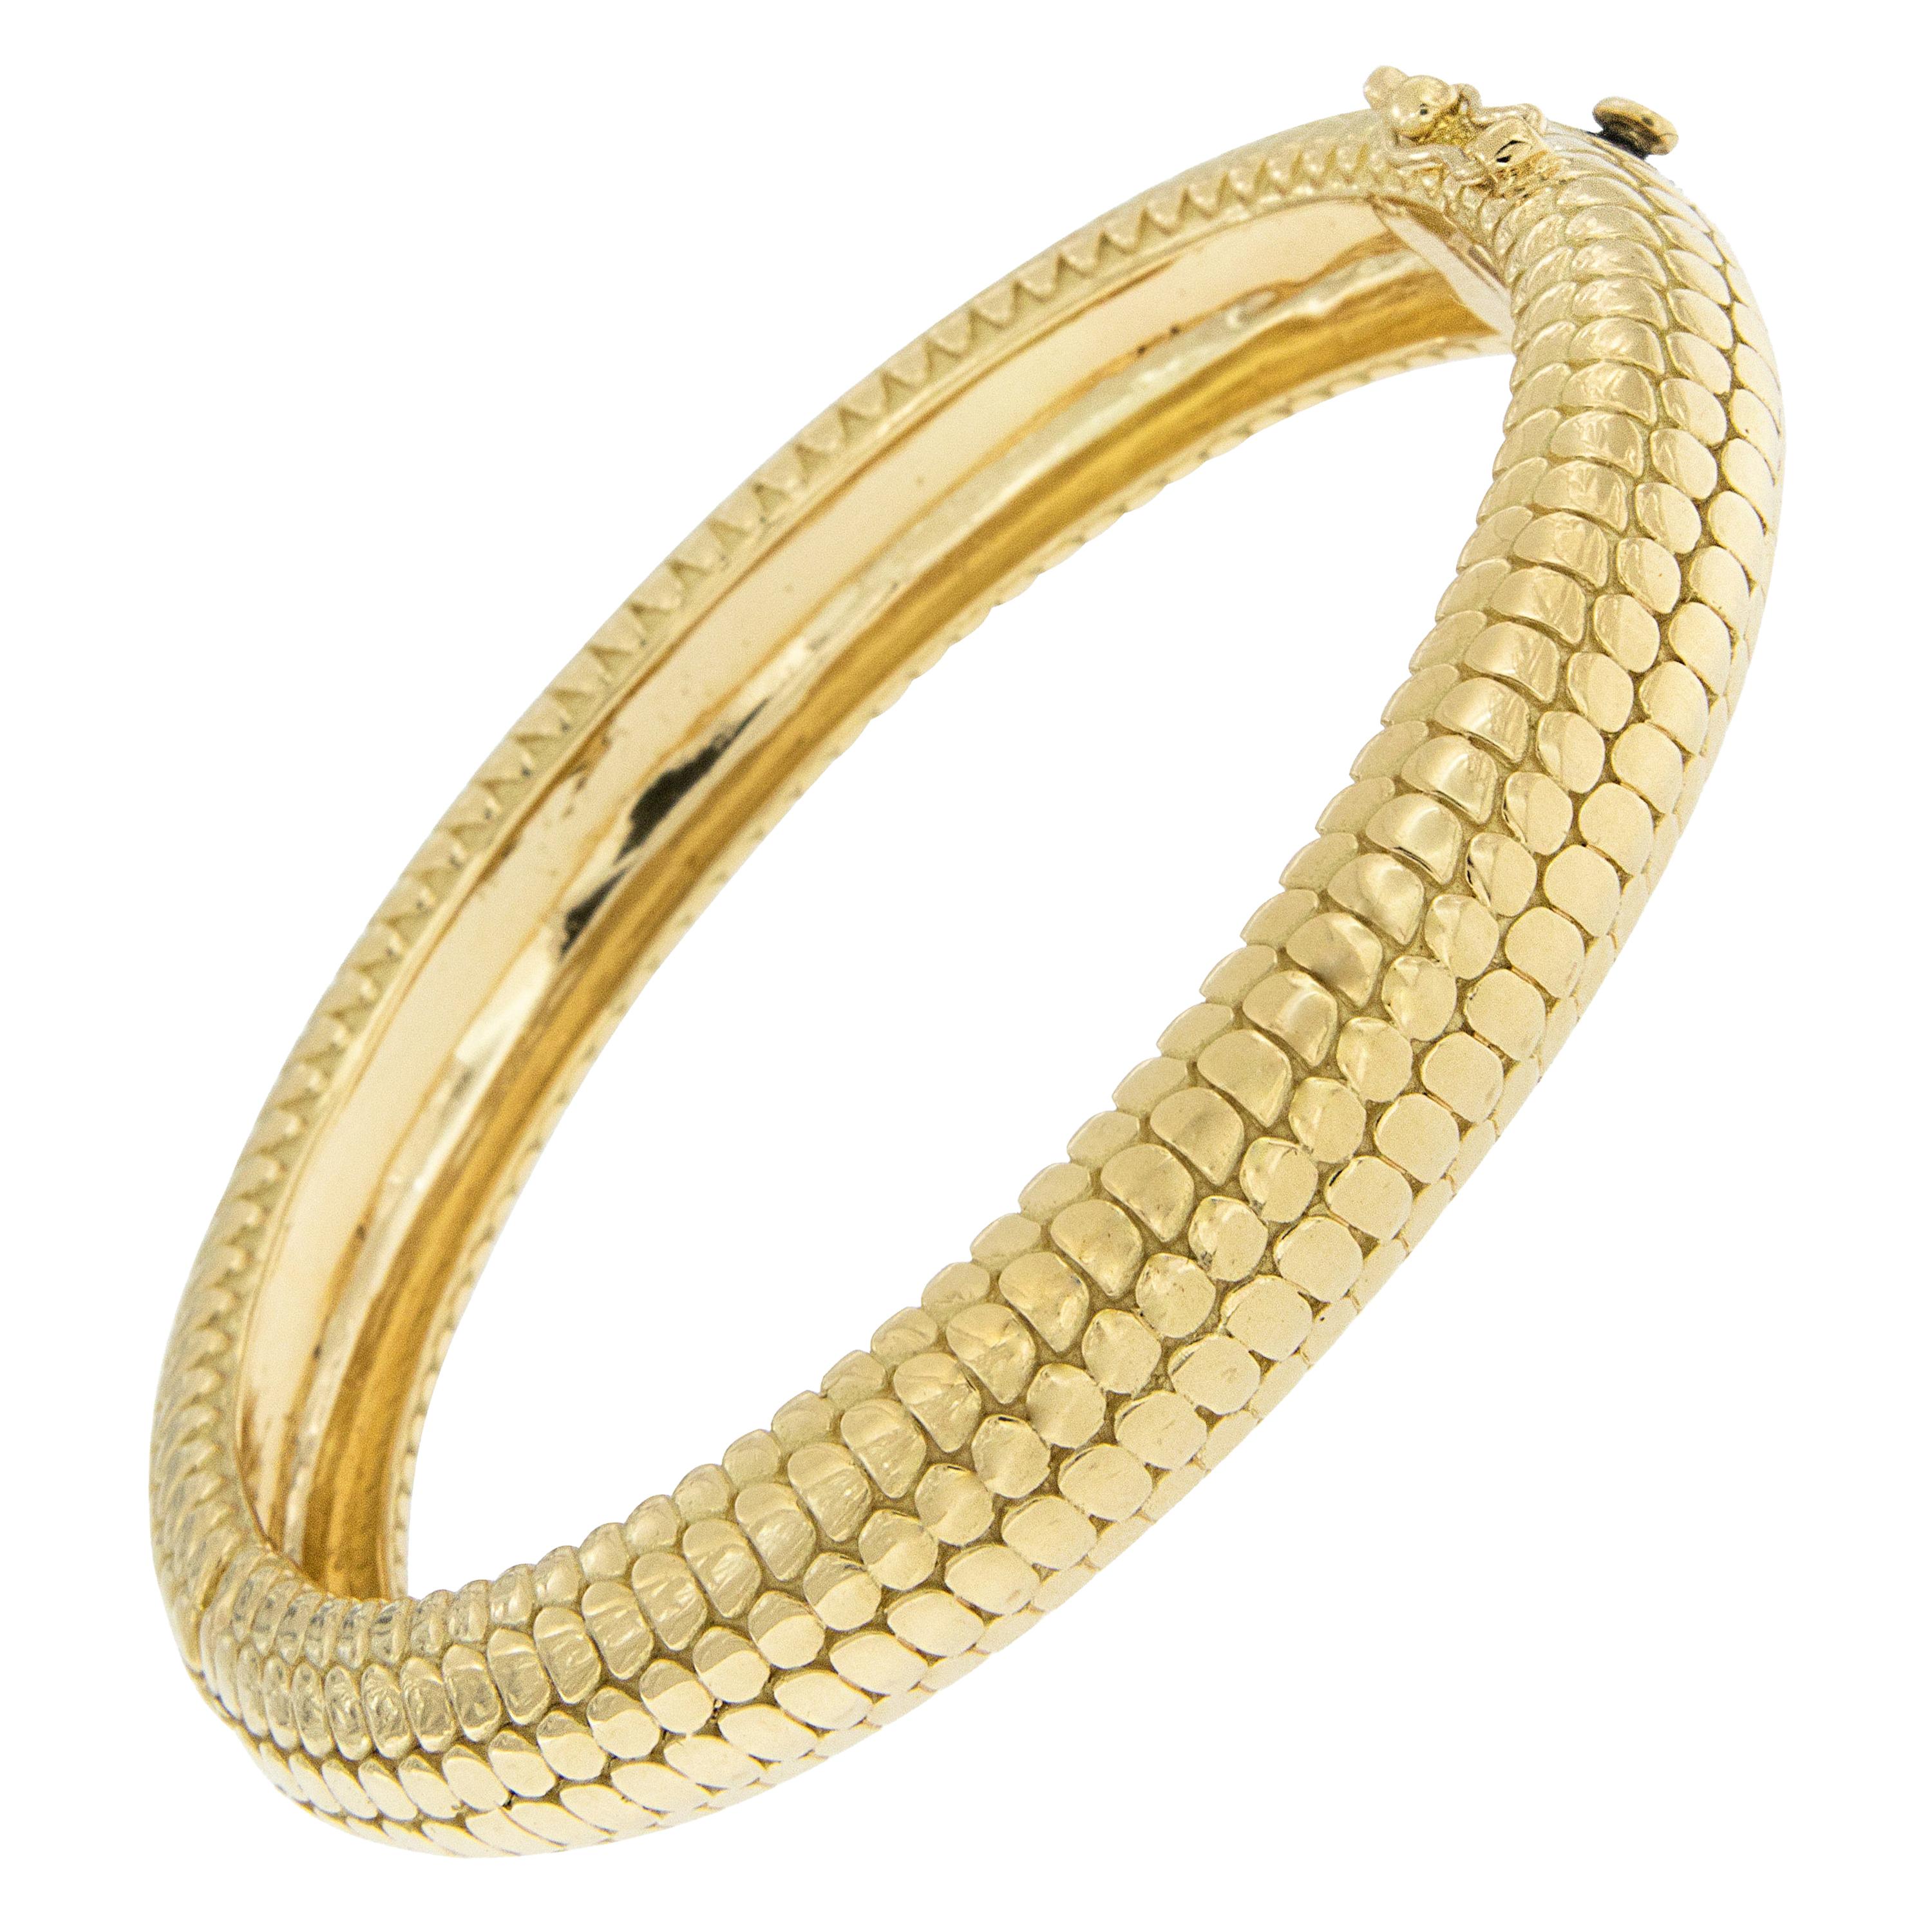 18 Karat Yellow Gold "Shagrin" Bangle Bracelet by Gemlok